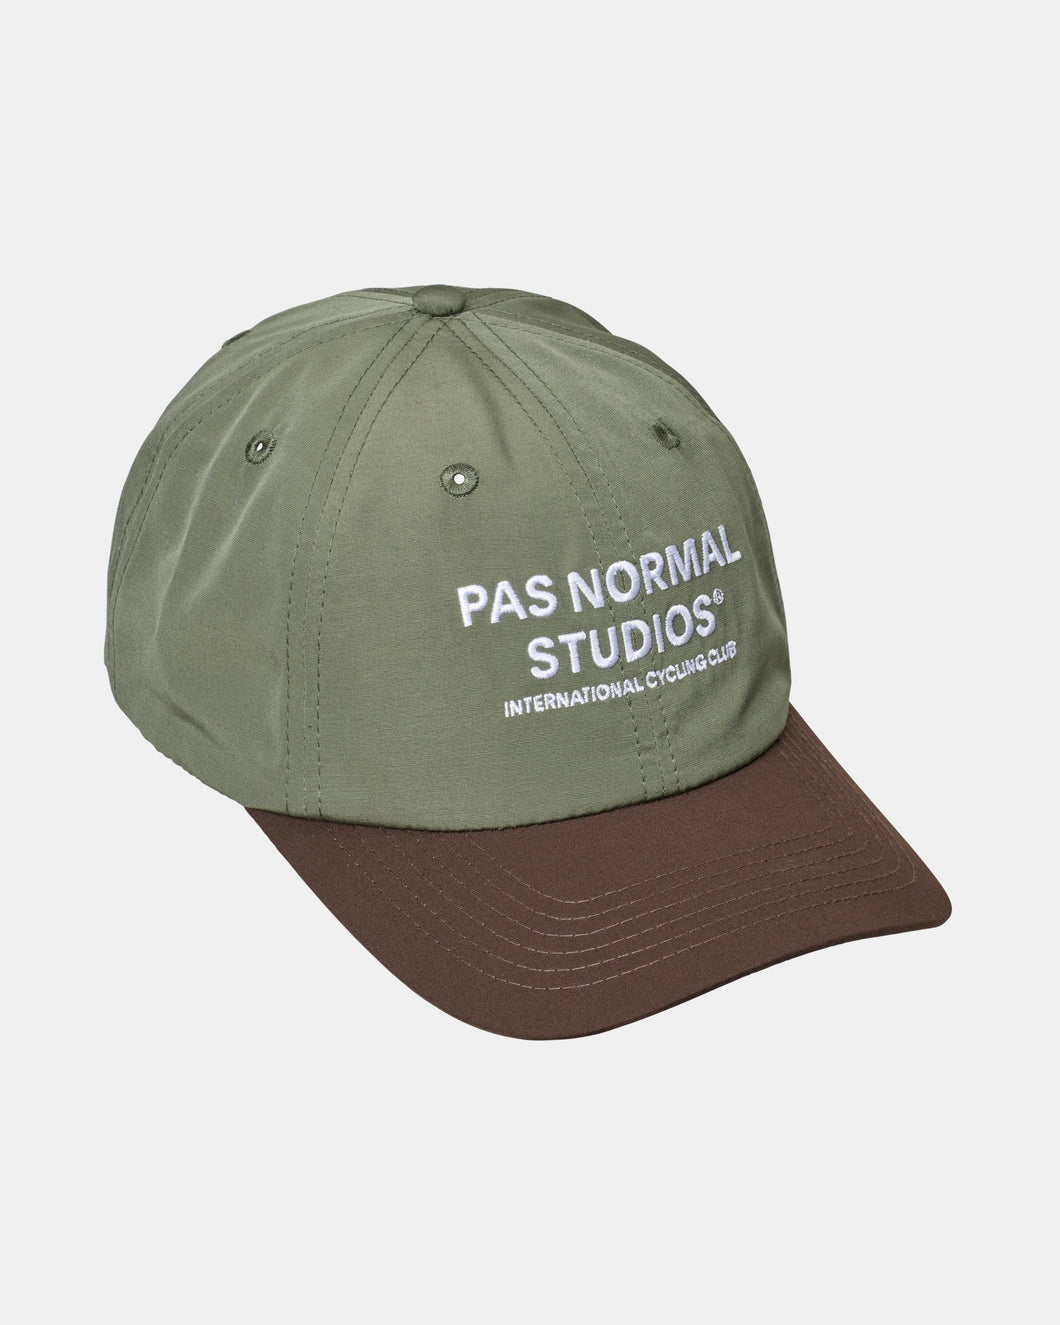 Pas Normal Studios - Off-Race Cap - Dark Celeste/Bronze